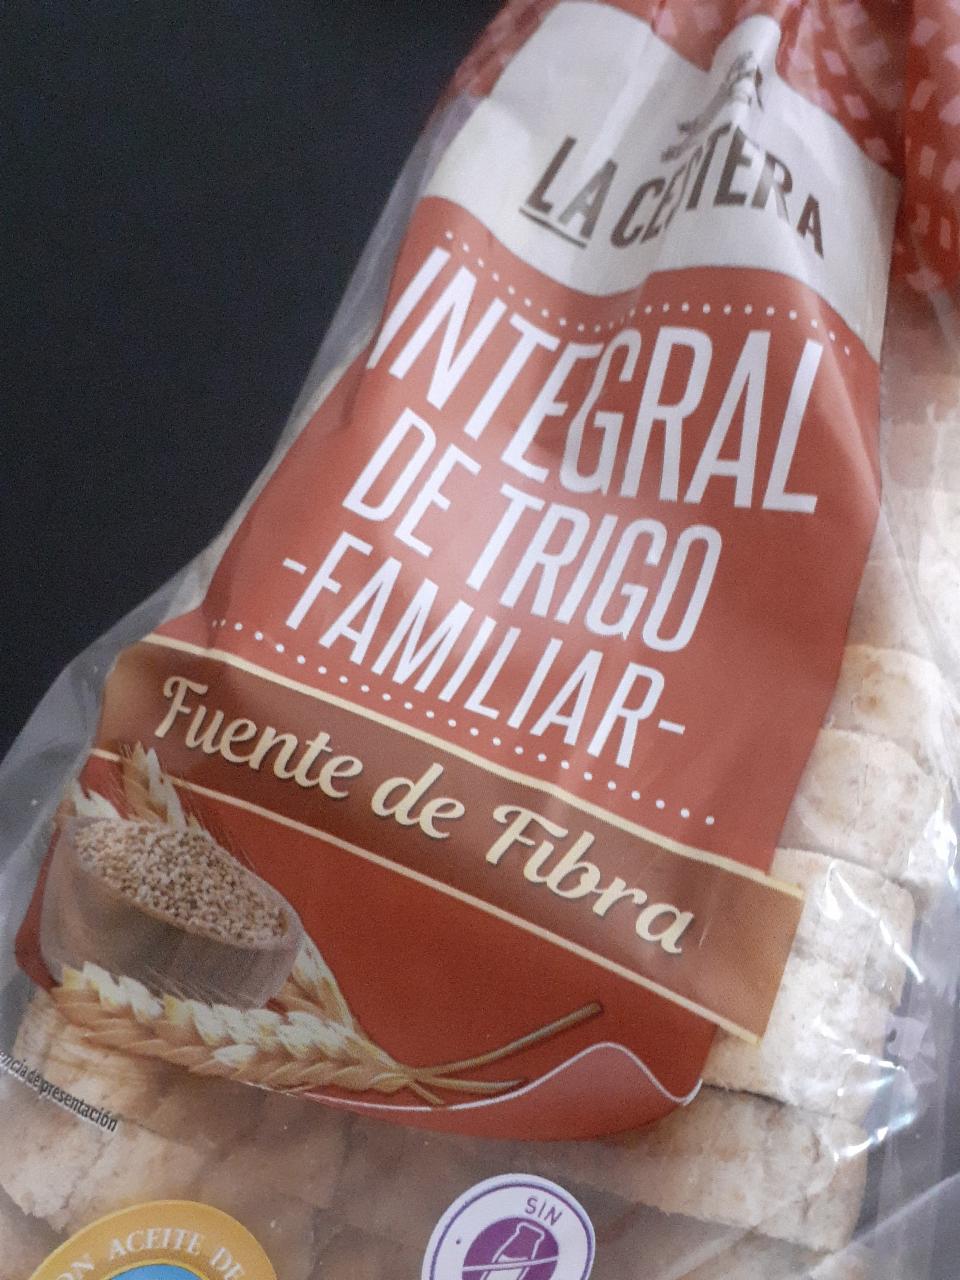 Fotografie - toustový chlieb Integral de trigo Fuente de fibra